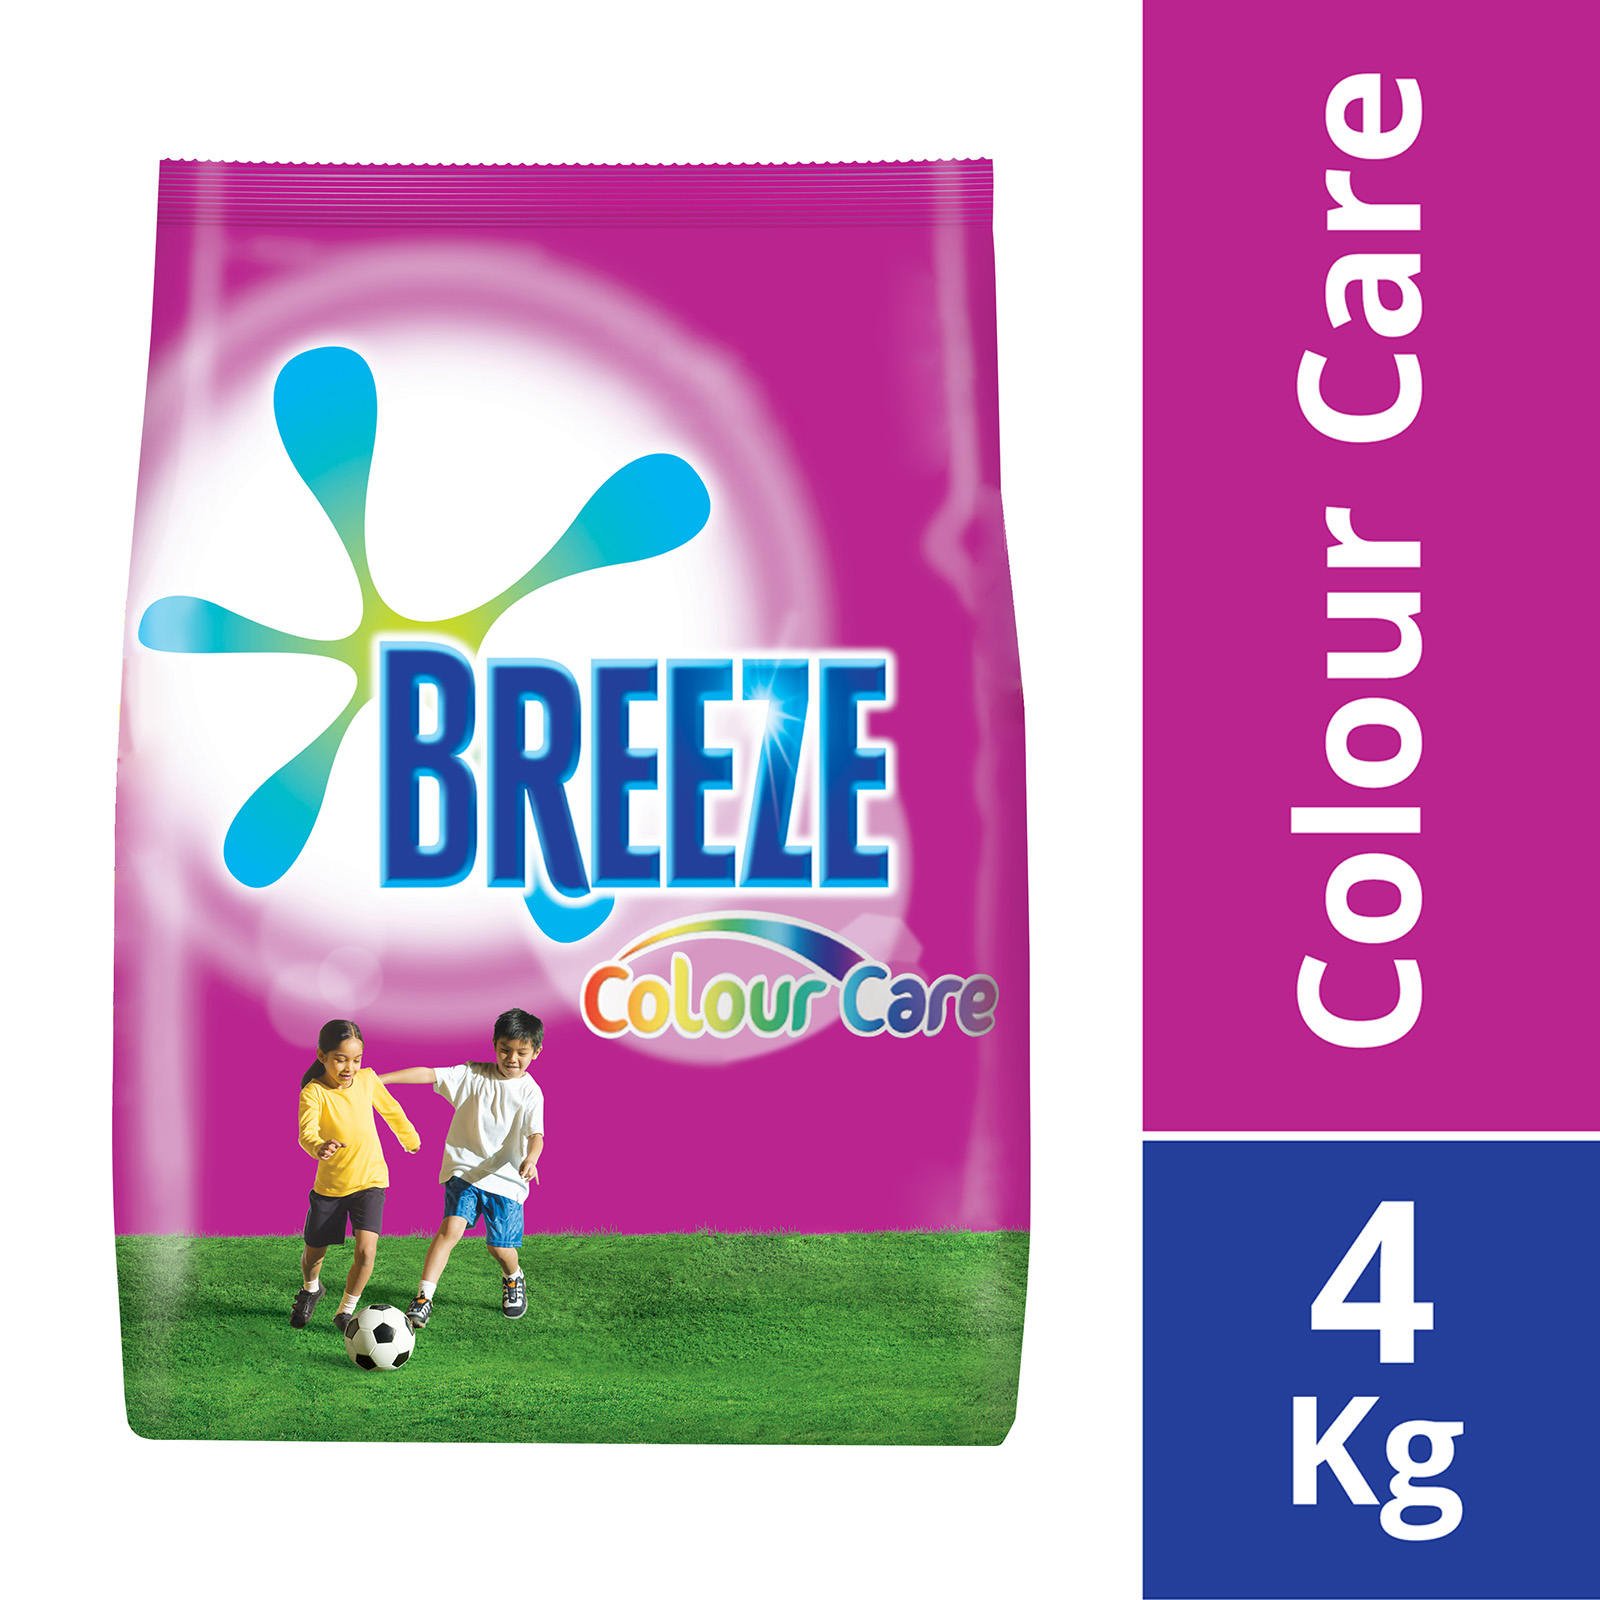 Breeze Colour Care Powder Detergent 4kg - from RedMart